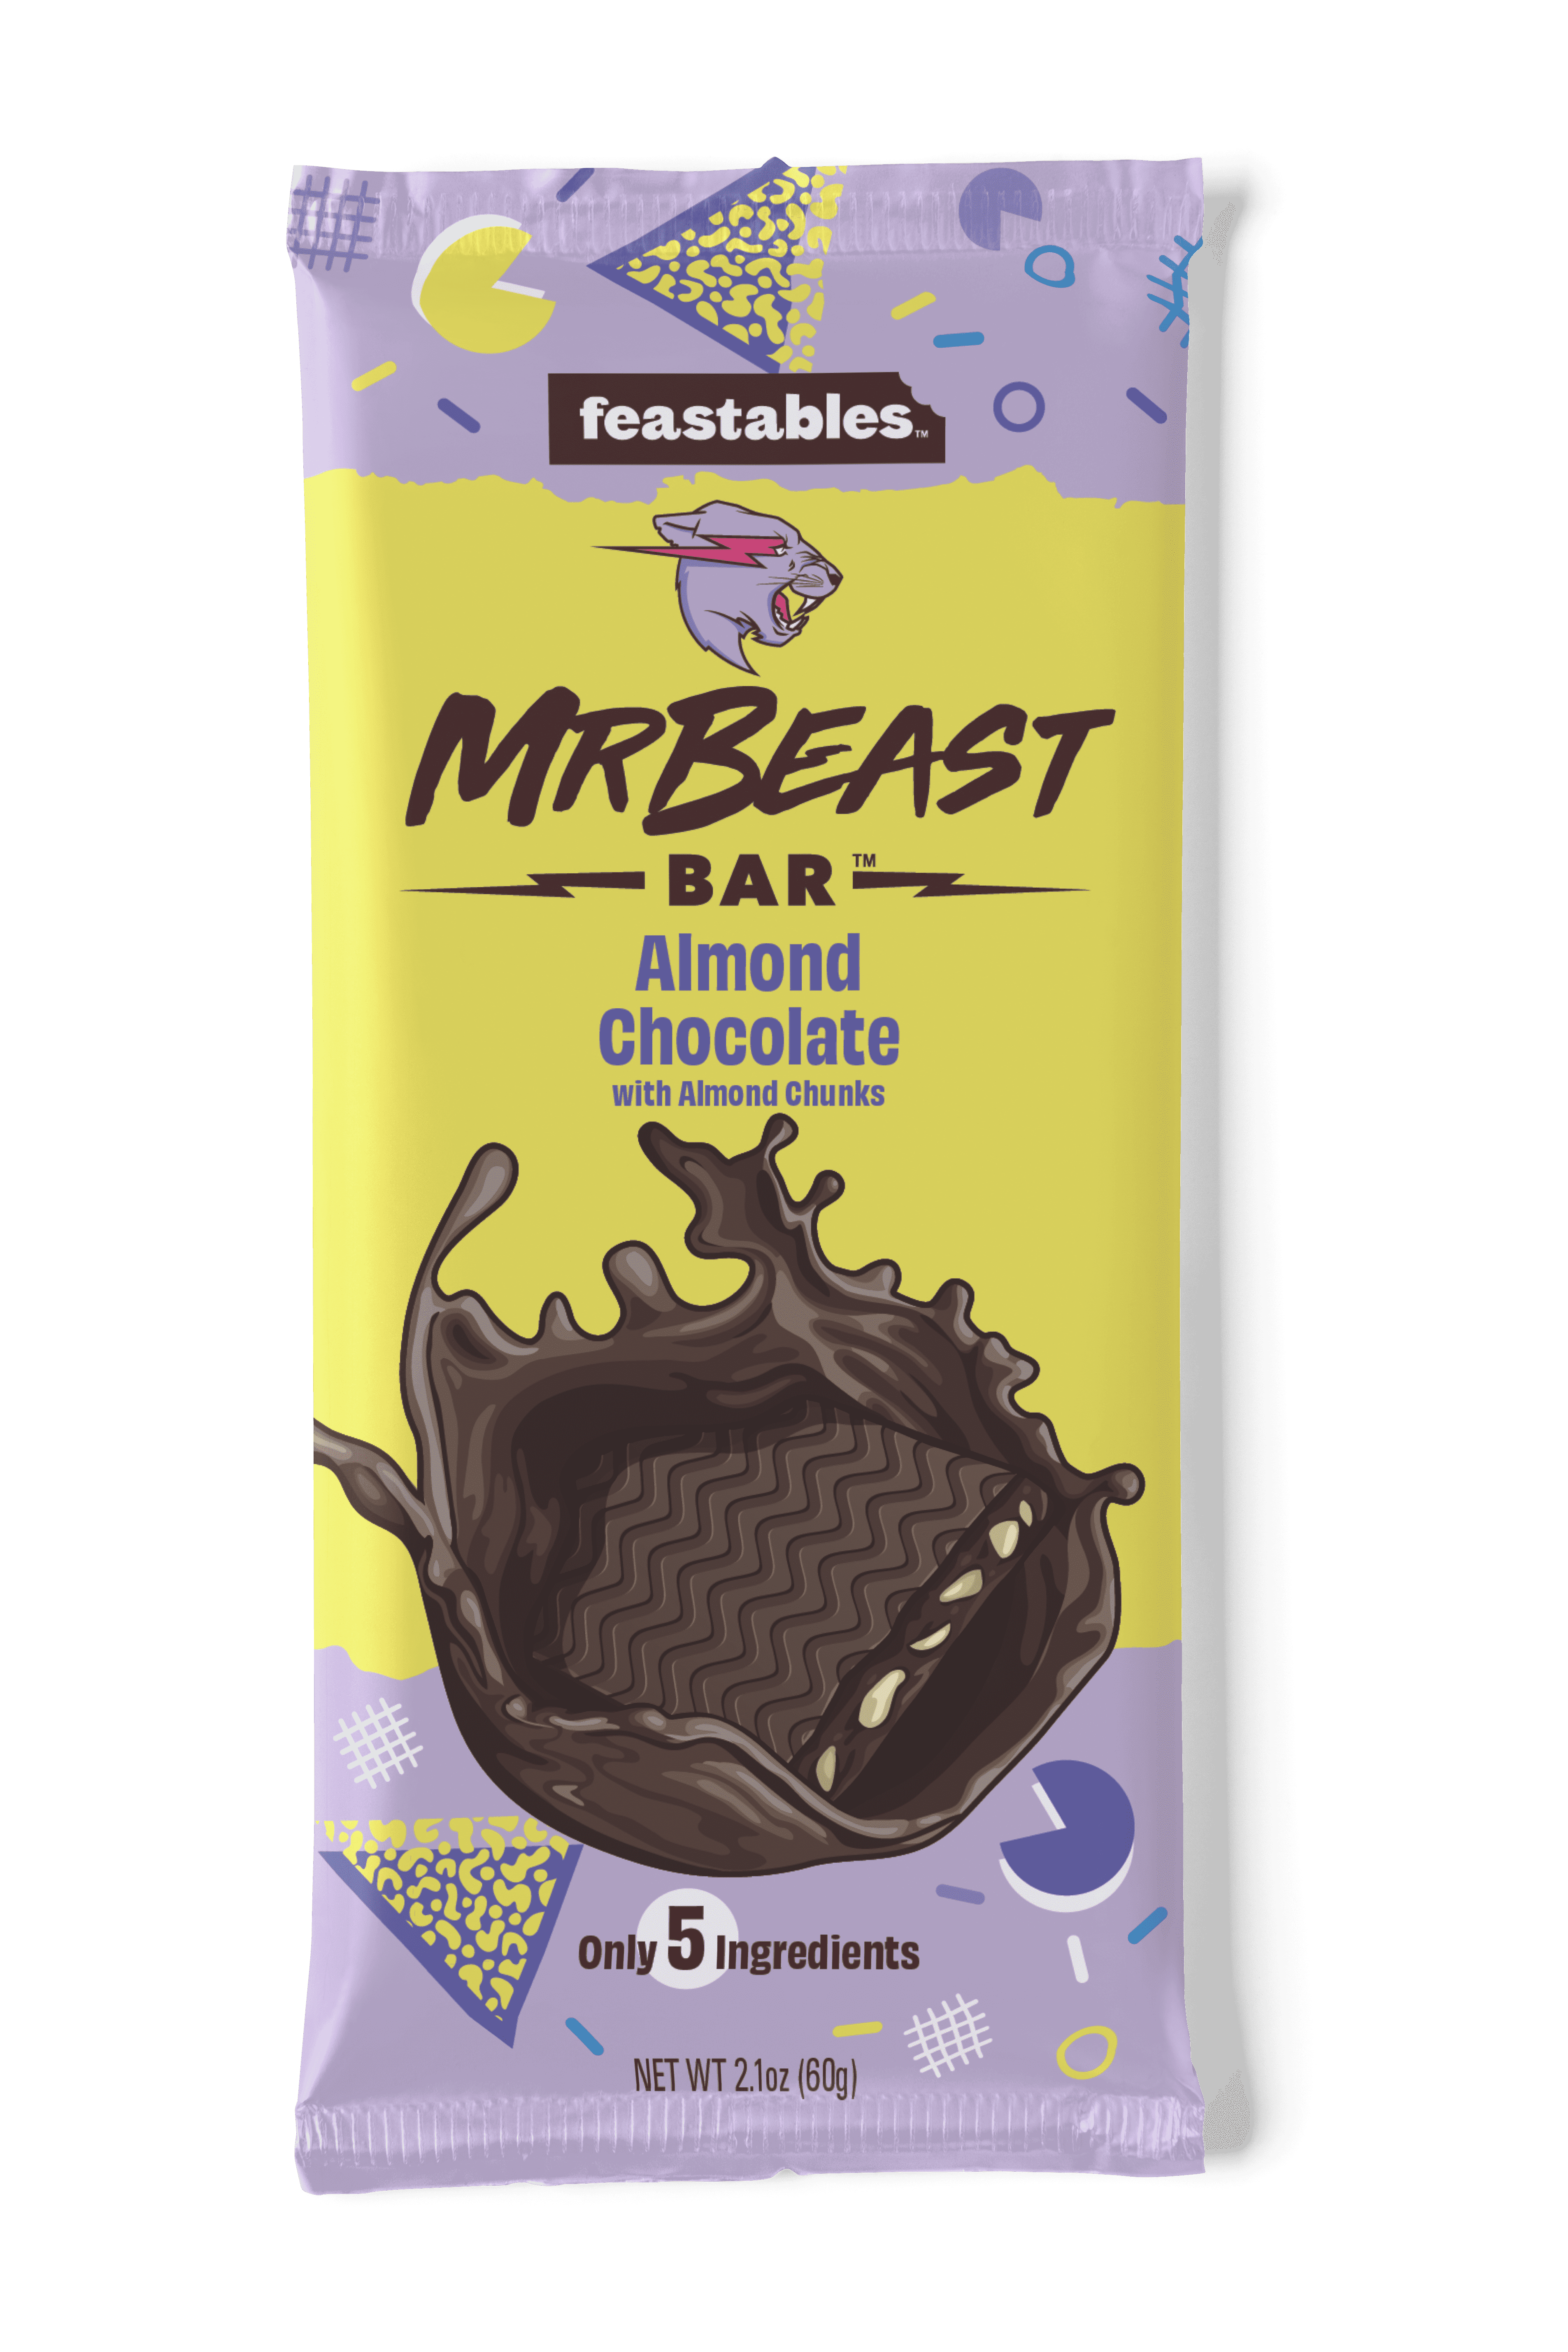 Feastables MrBeast Almond Chocolate Bar, 2.1 oz, 1 Bar